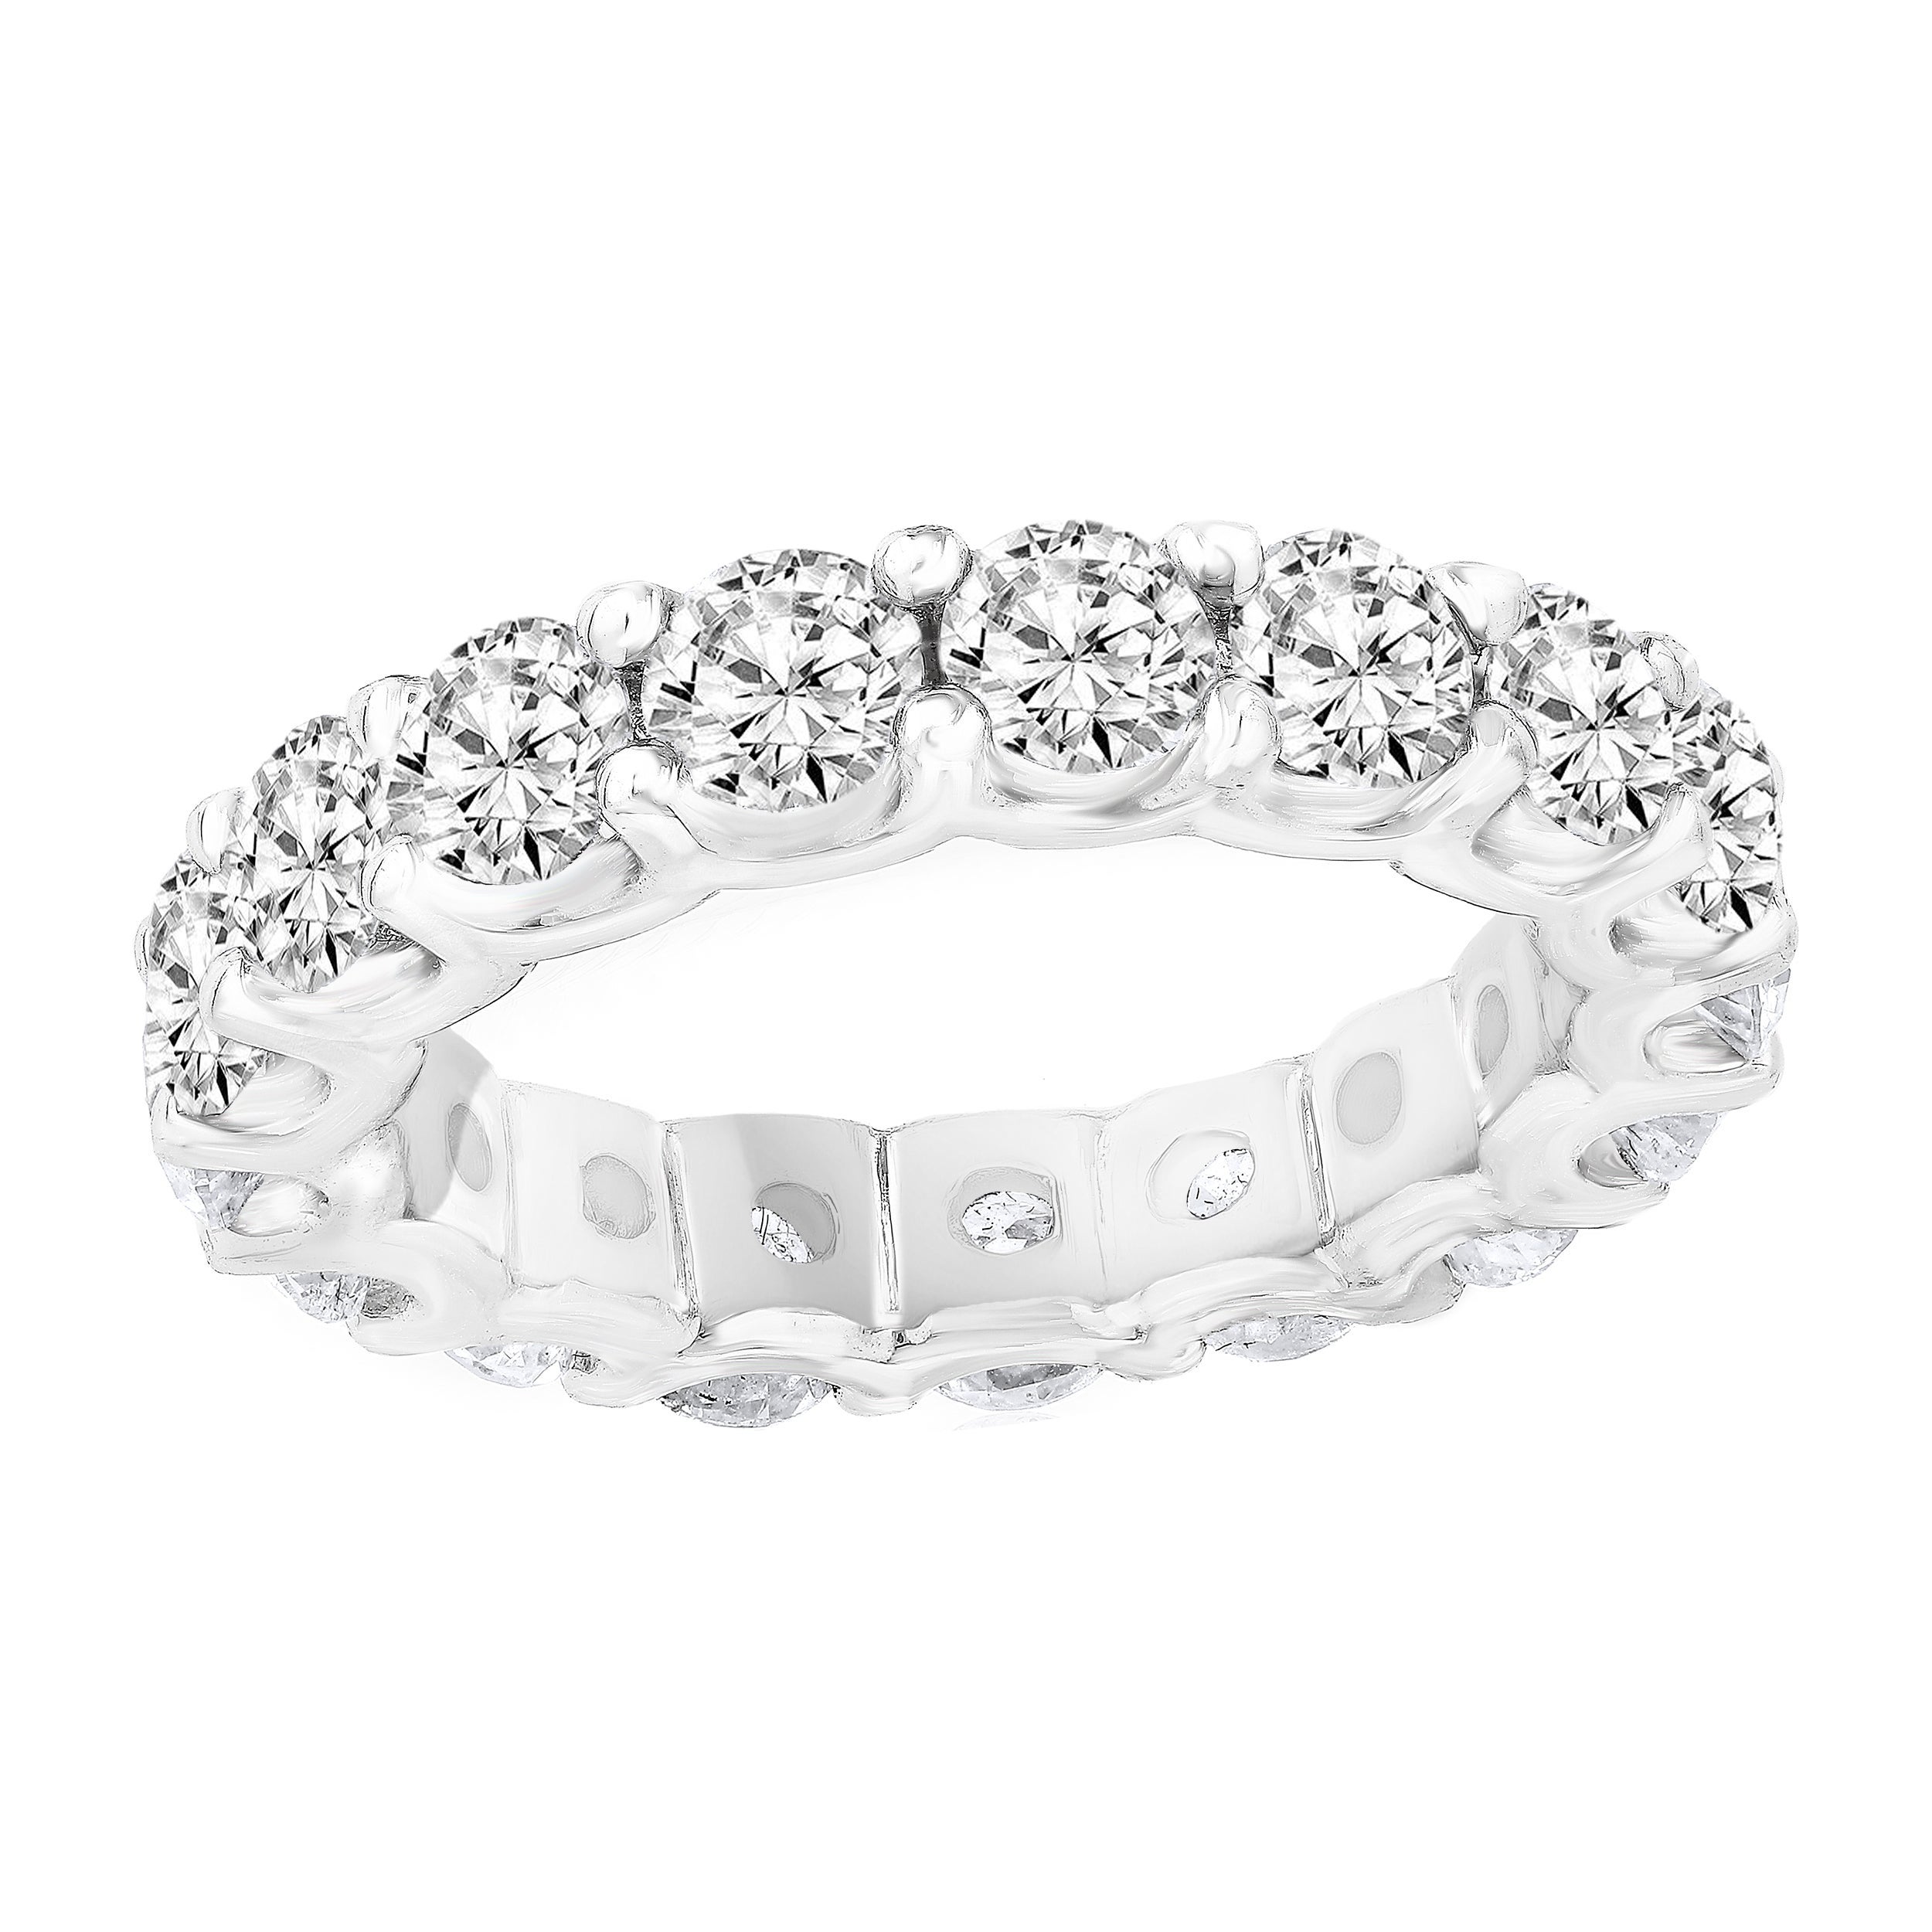 4.01 Carat Diamond Eternity Wedding Ring in 14k White Gold